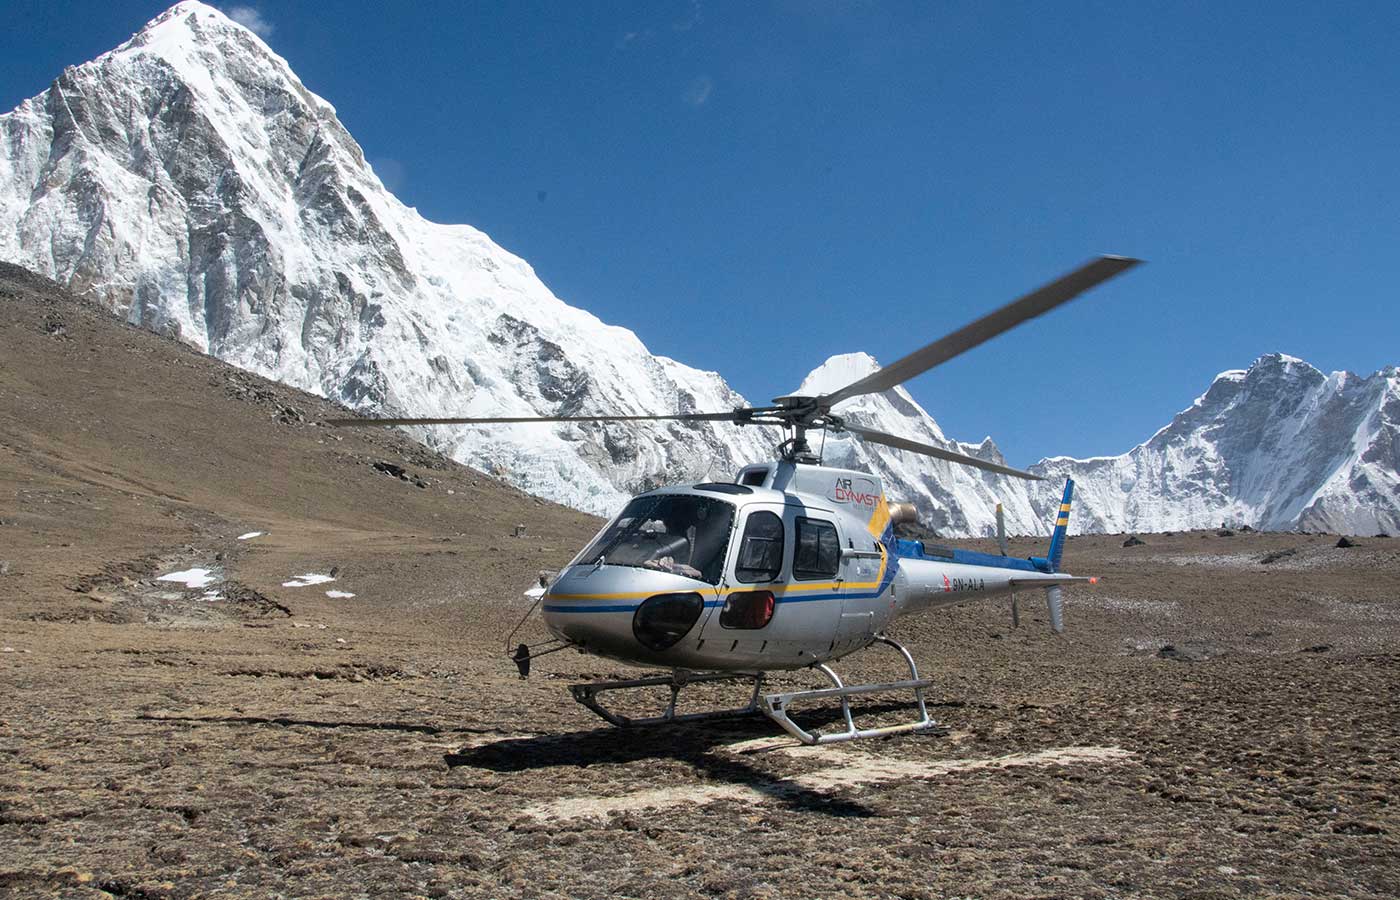 Short Everest base camp trek with Heli Chopper tour